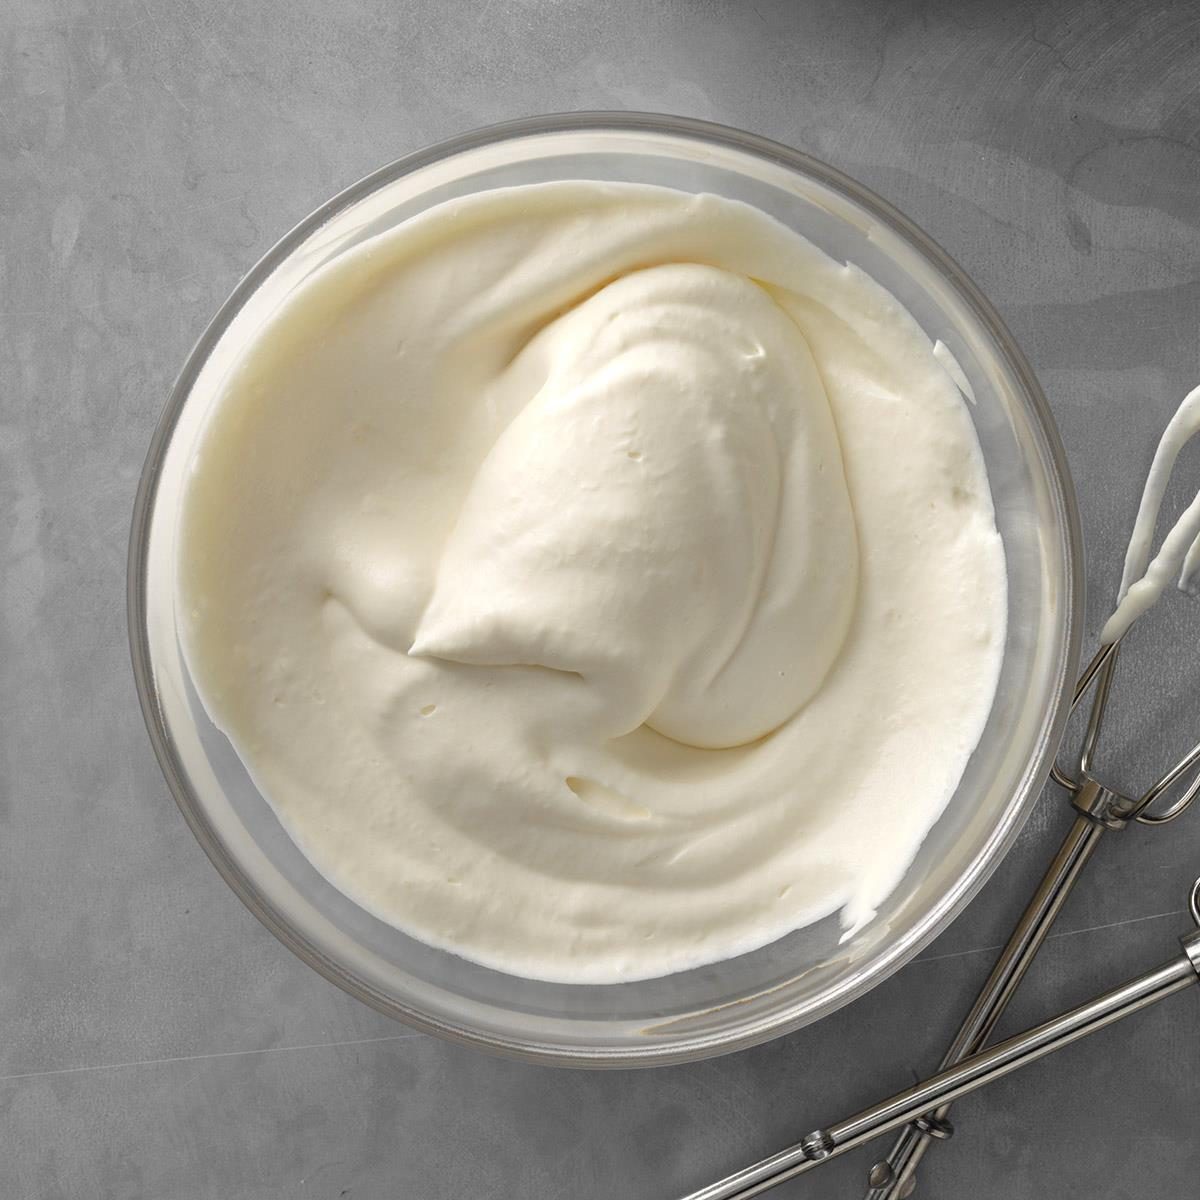 How to Make Sweetened Whipped Cream (4-ingredient recipe)